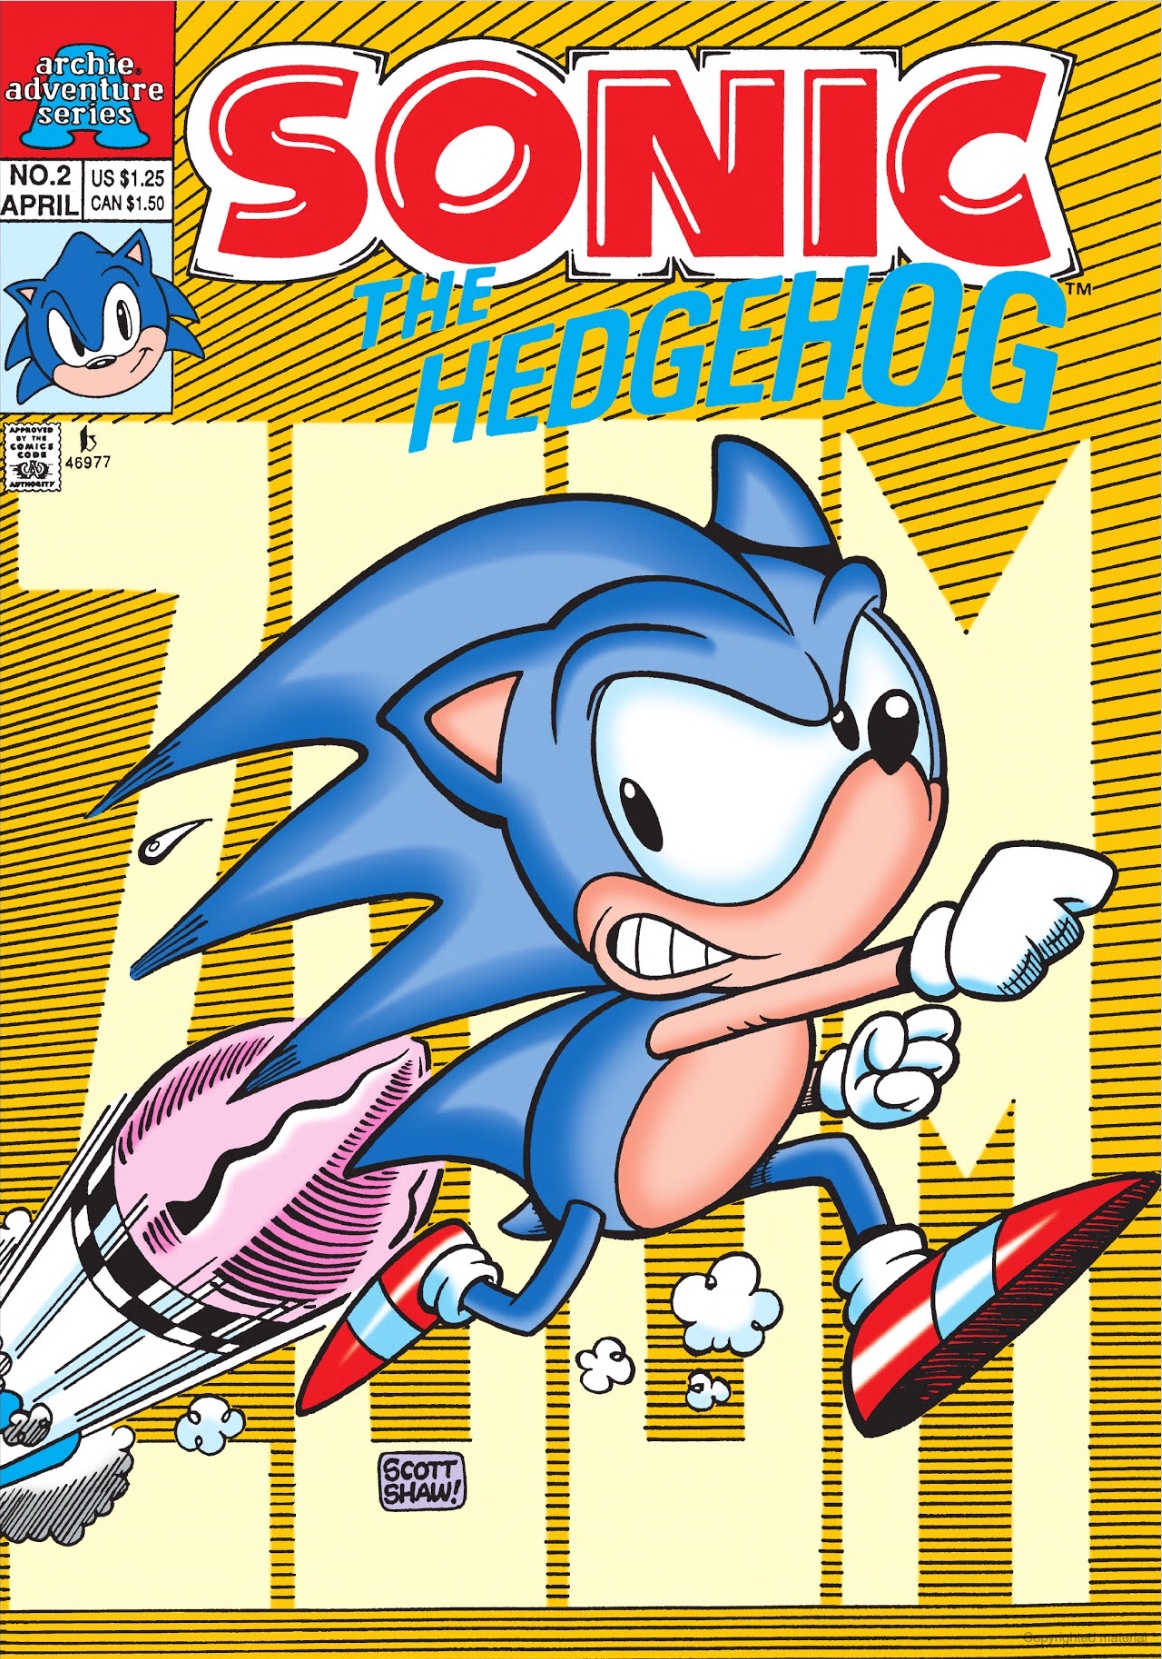 Archie Sonic the Hedgehog Issue 2 (miniseries) | Sonic News Network | FANDOM powered ...1162 x 1659